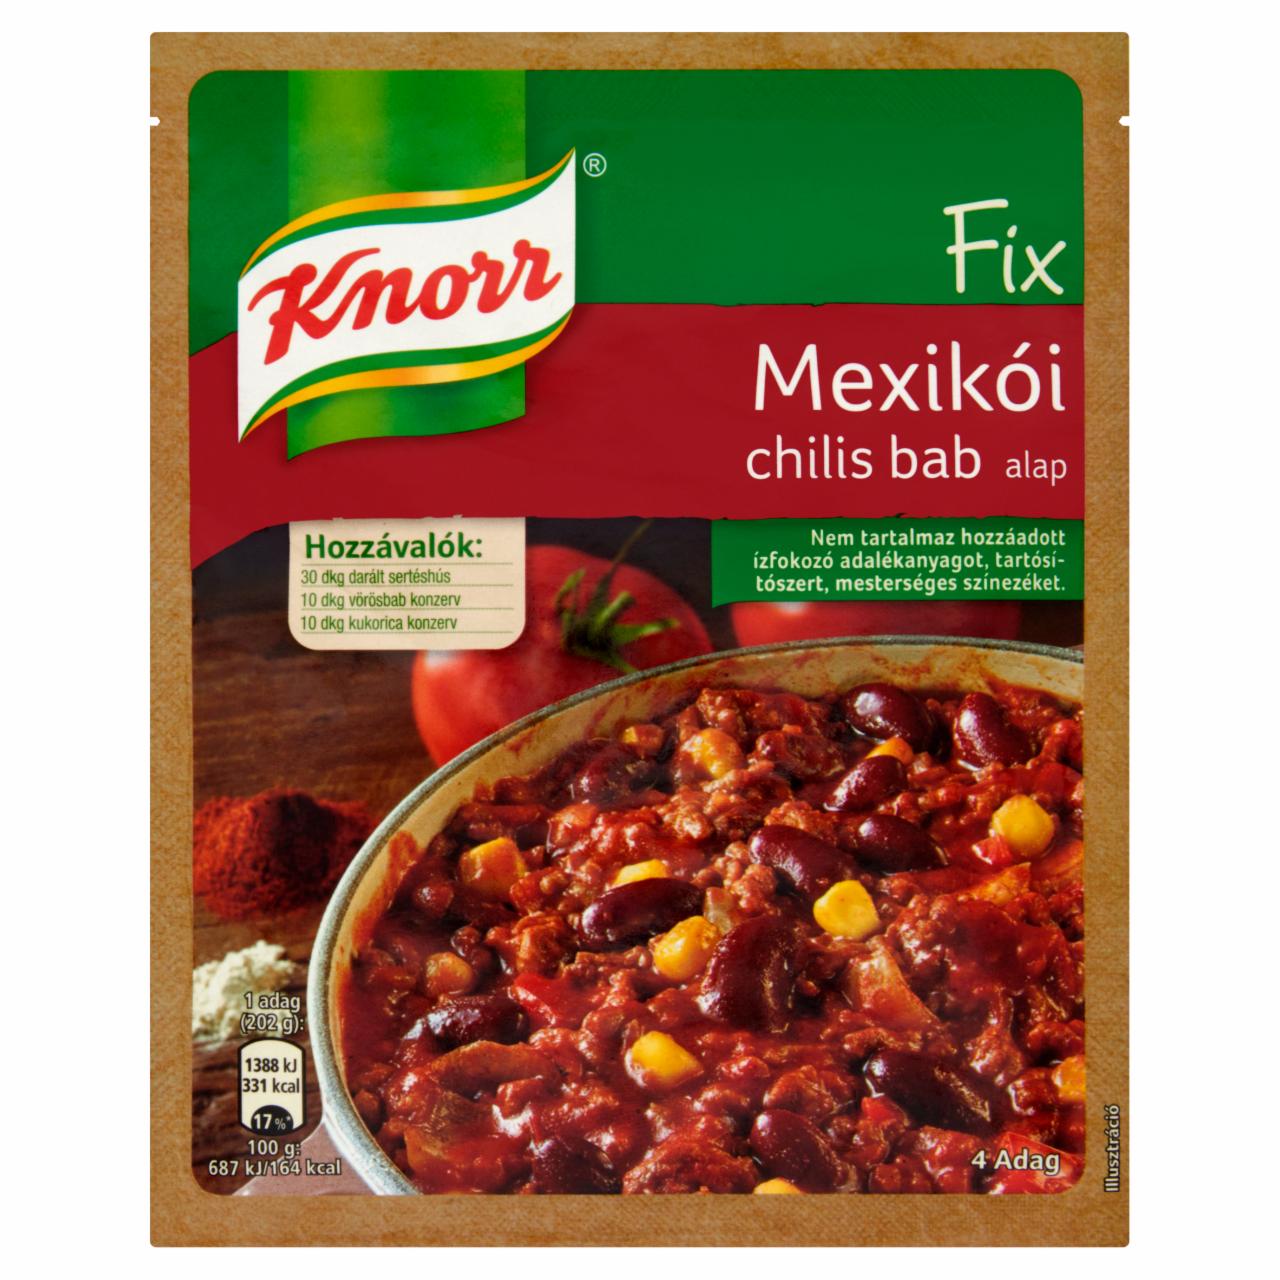 Képek - Knorr mexikói chilis bab alap 50 g